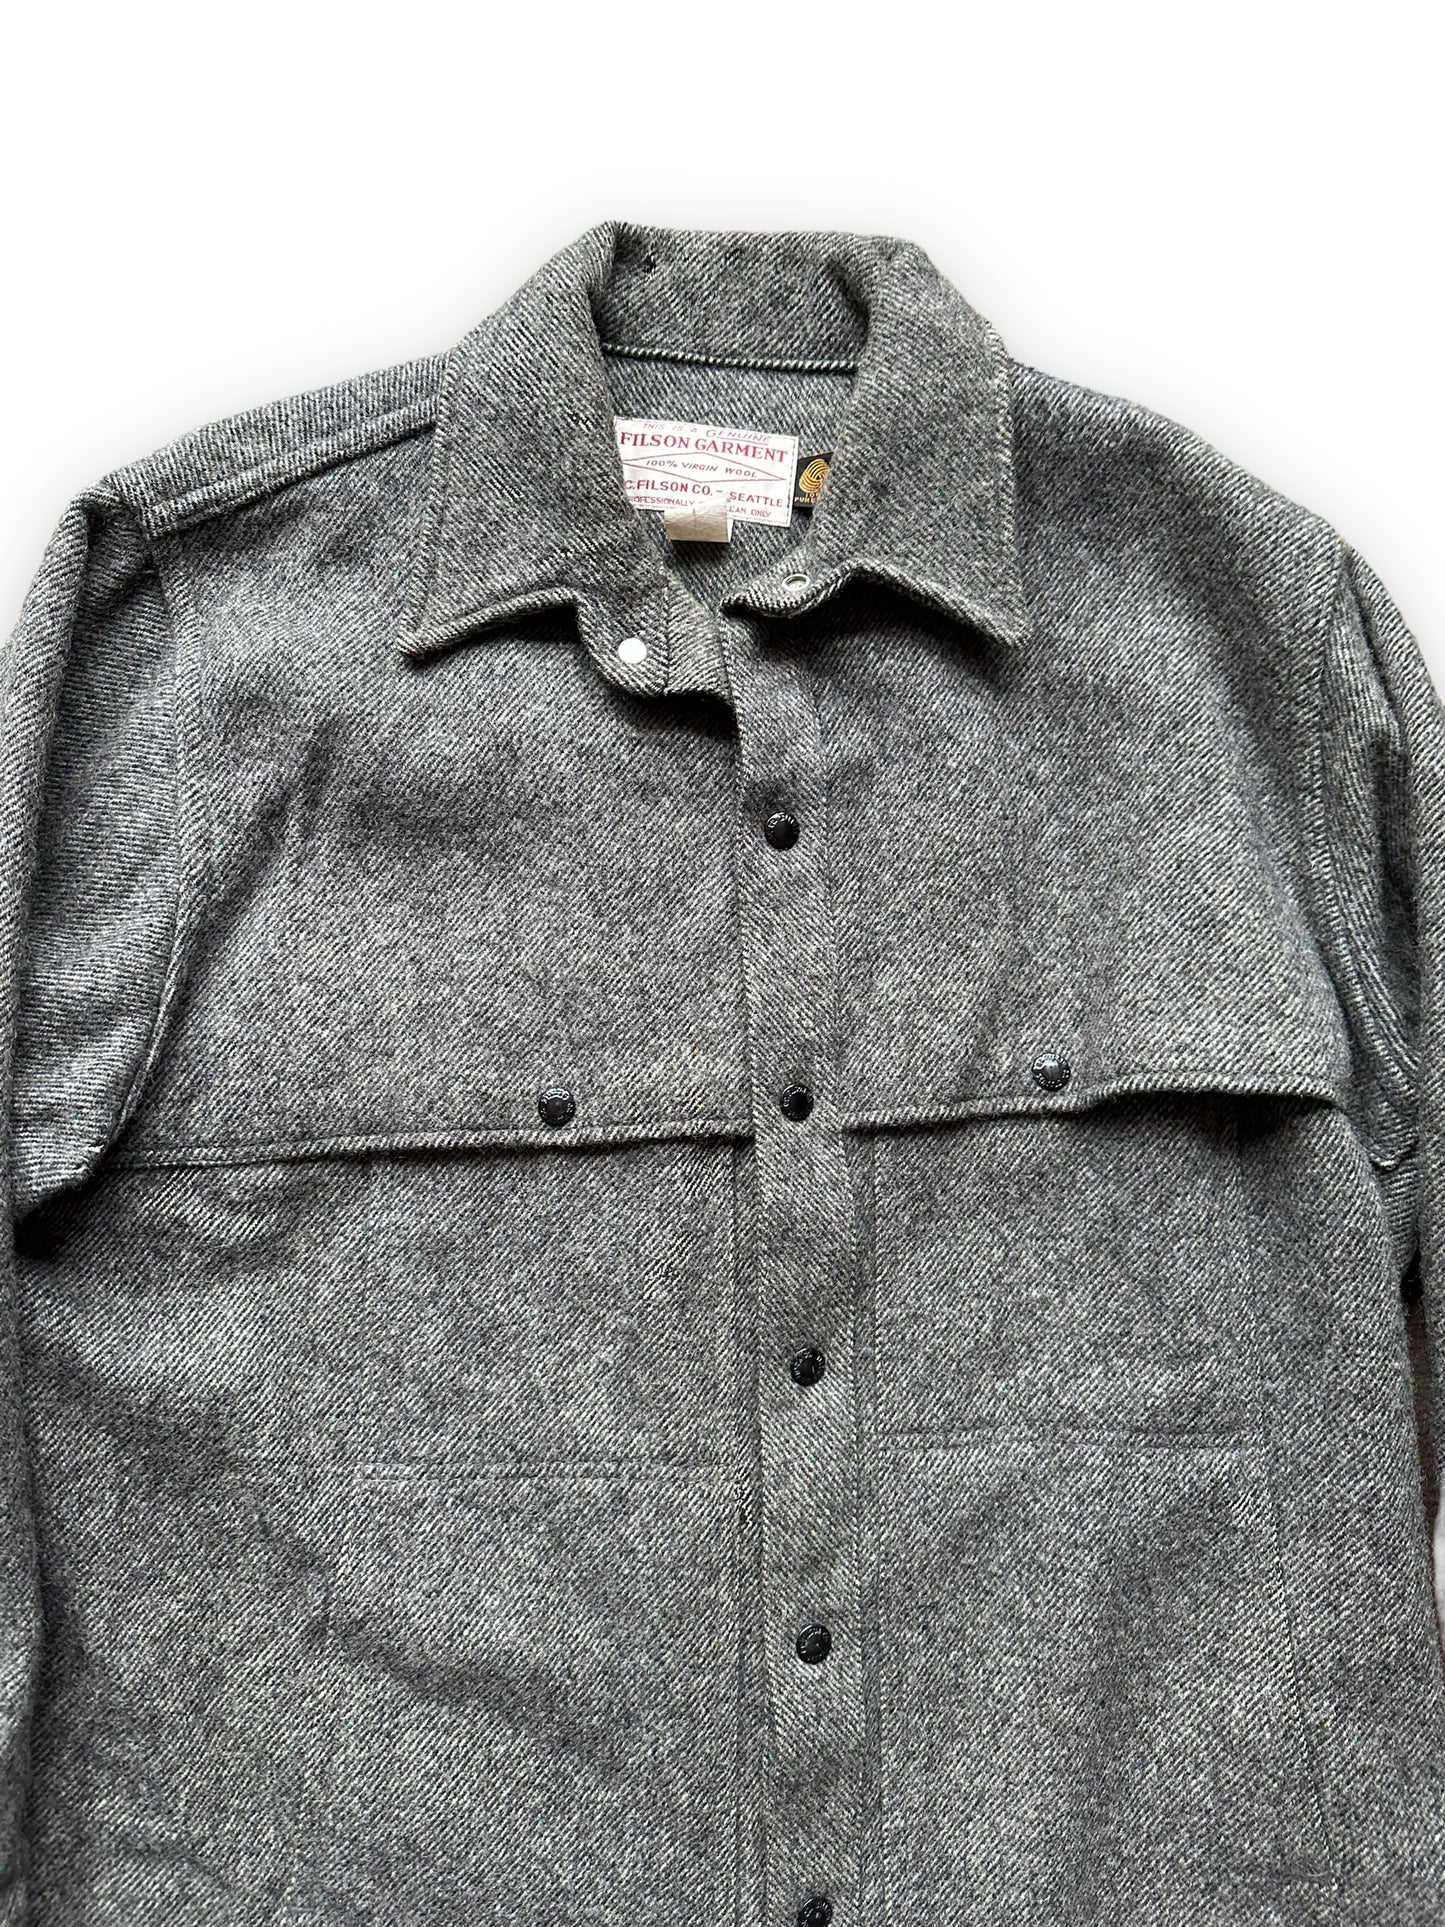 Upper Front Detail on Vintage Filson Grey Herringbone Cape Coat SZ Large  |  Barn Owl Vintage Goods | Vintage Wool Workwear Seattle